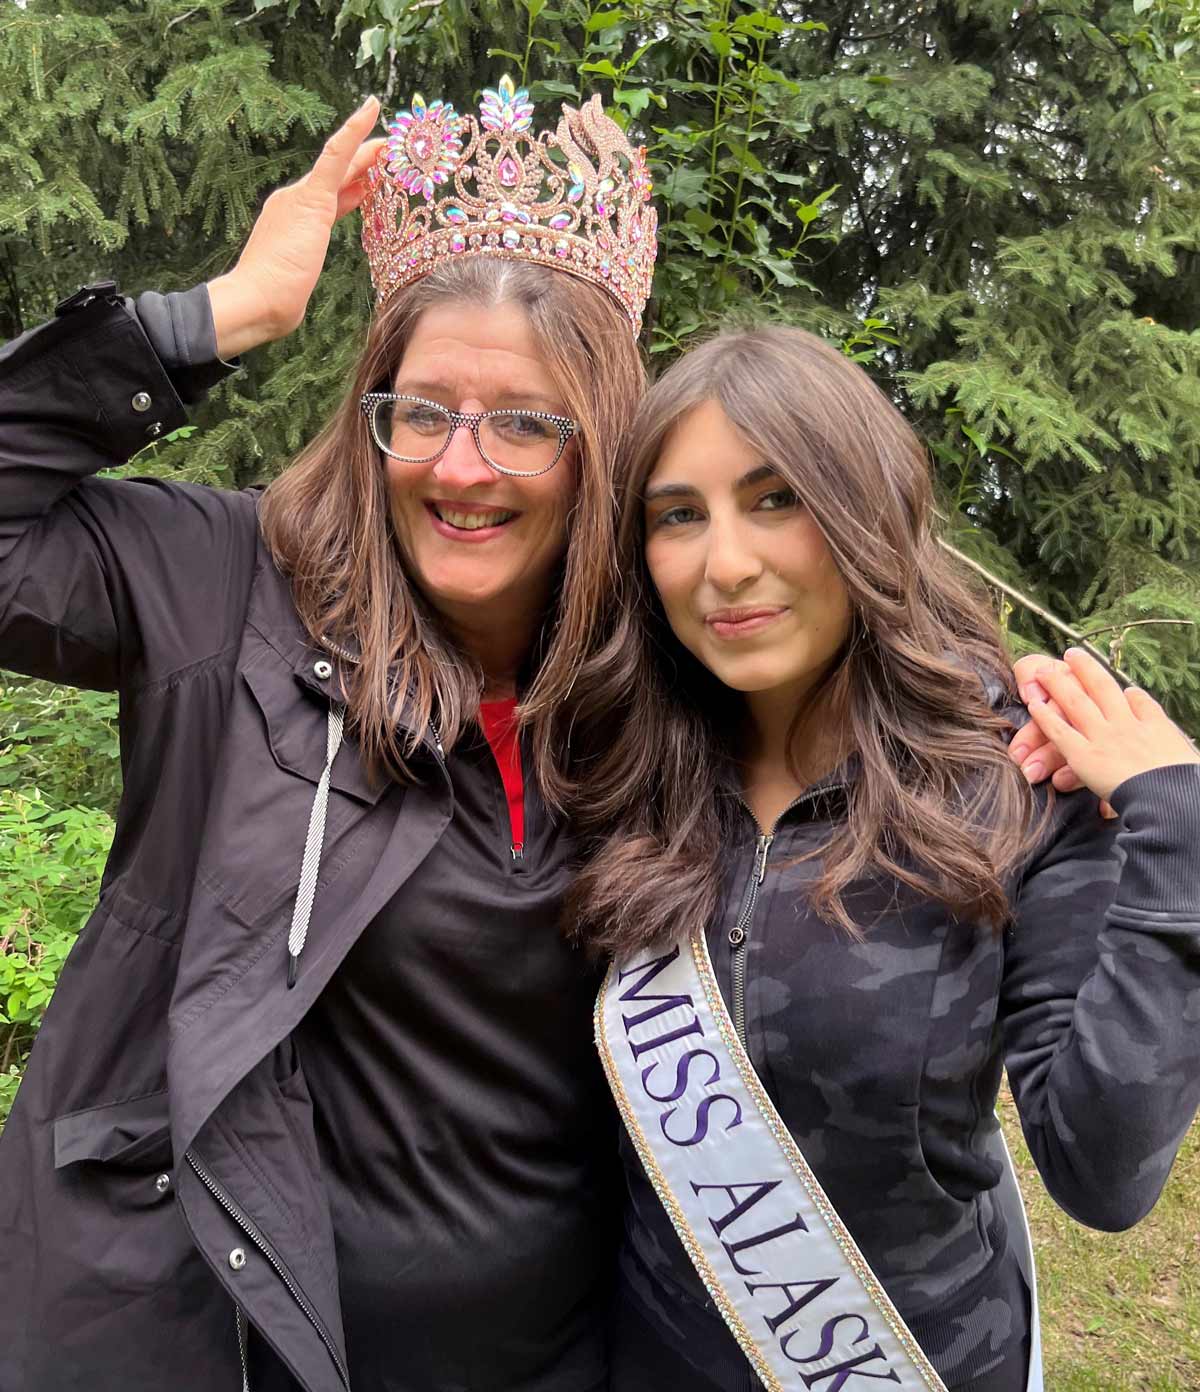 Sarah Lefebvre borrows the crown of a former Miss Alaska